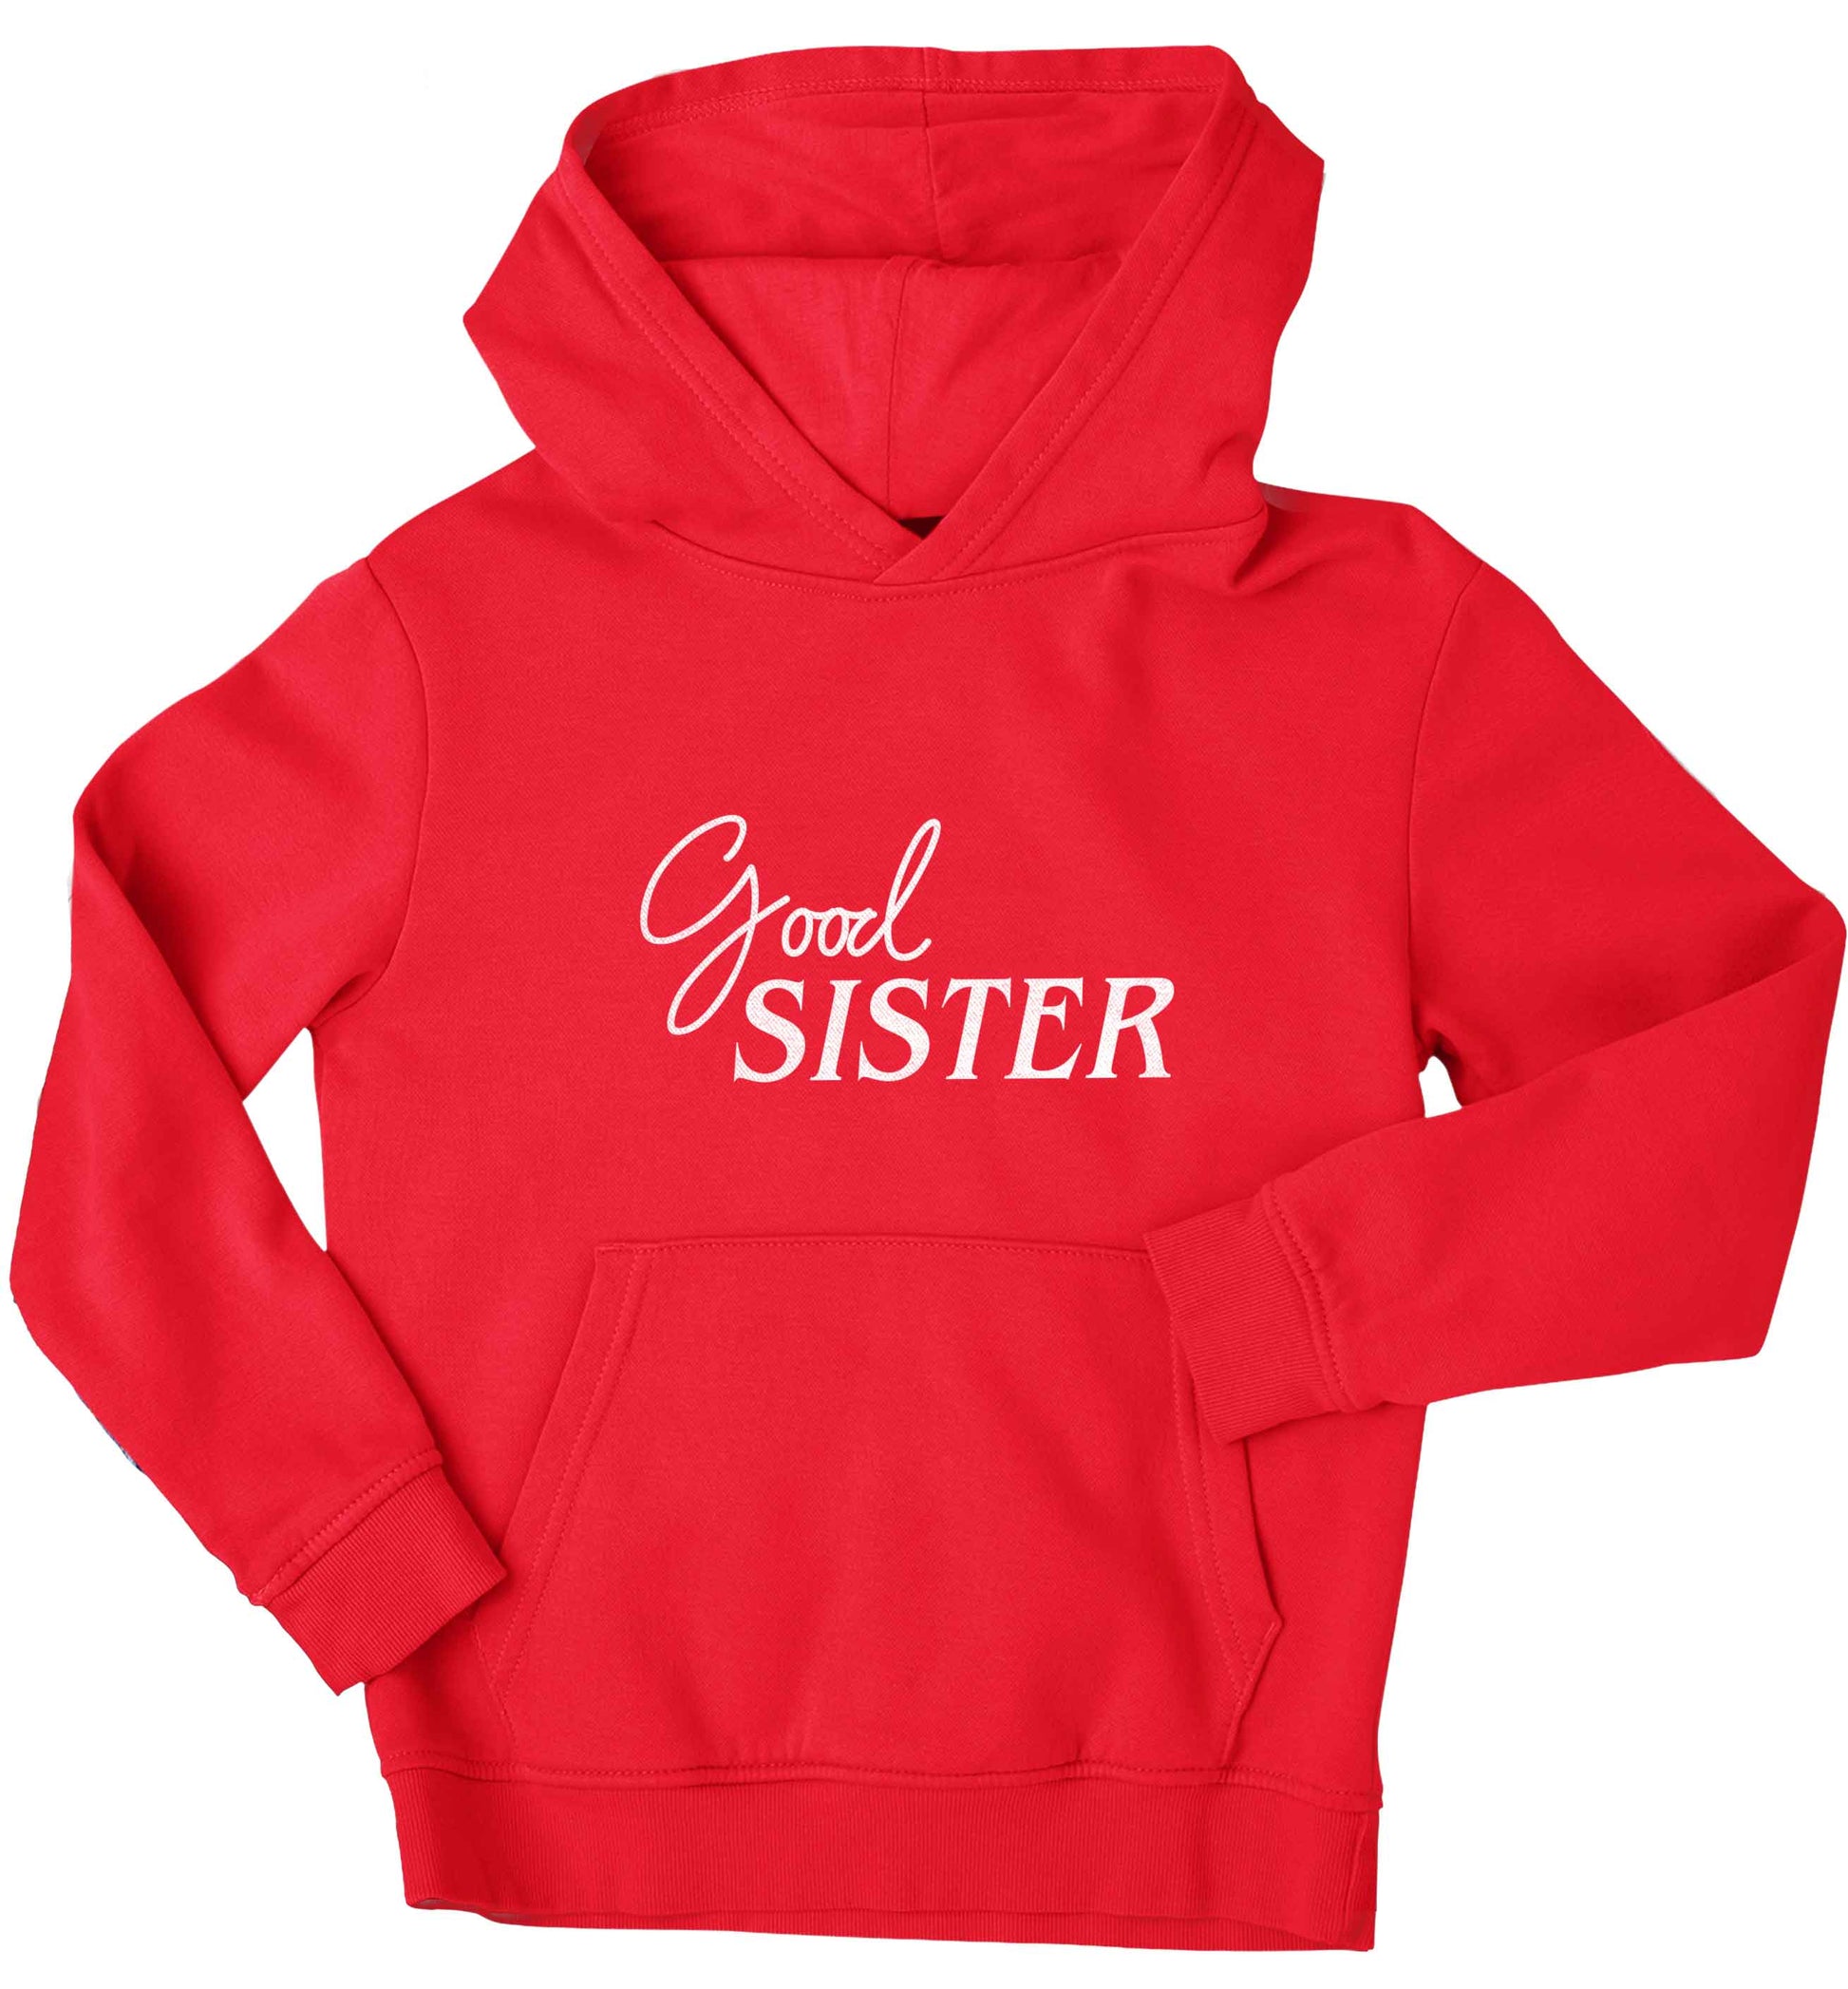 Good sister children's red hoodie 12-13 Years